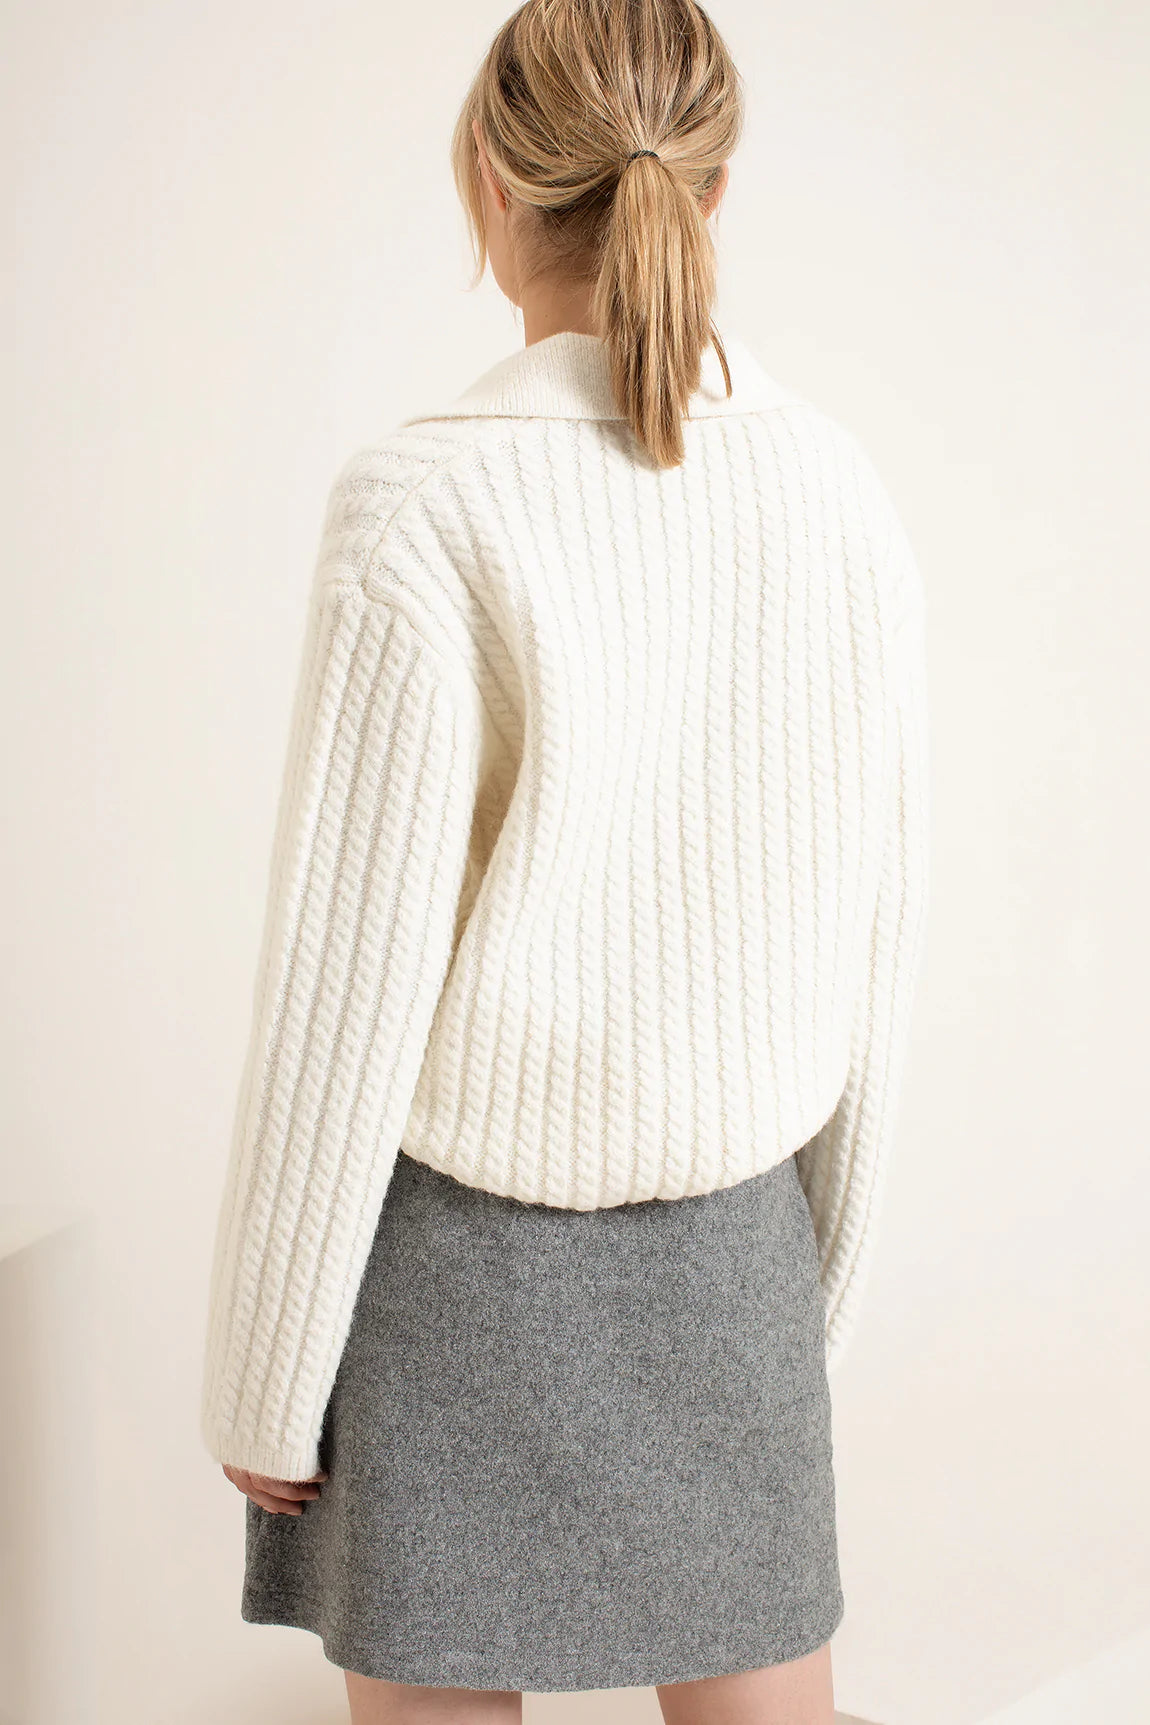 Josephine & Co | Kenji sweater